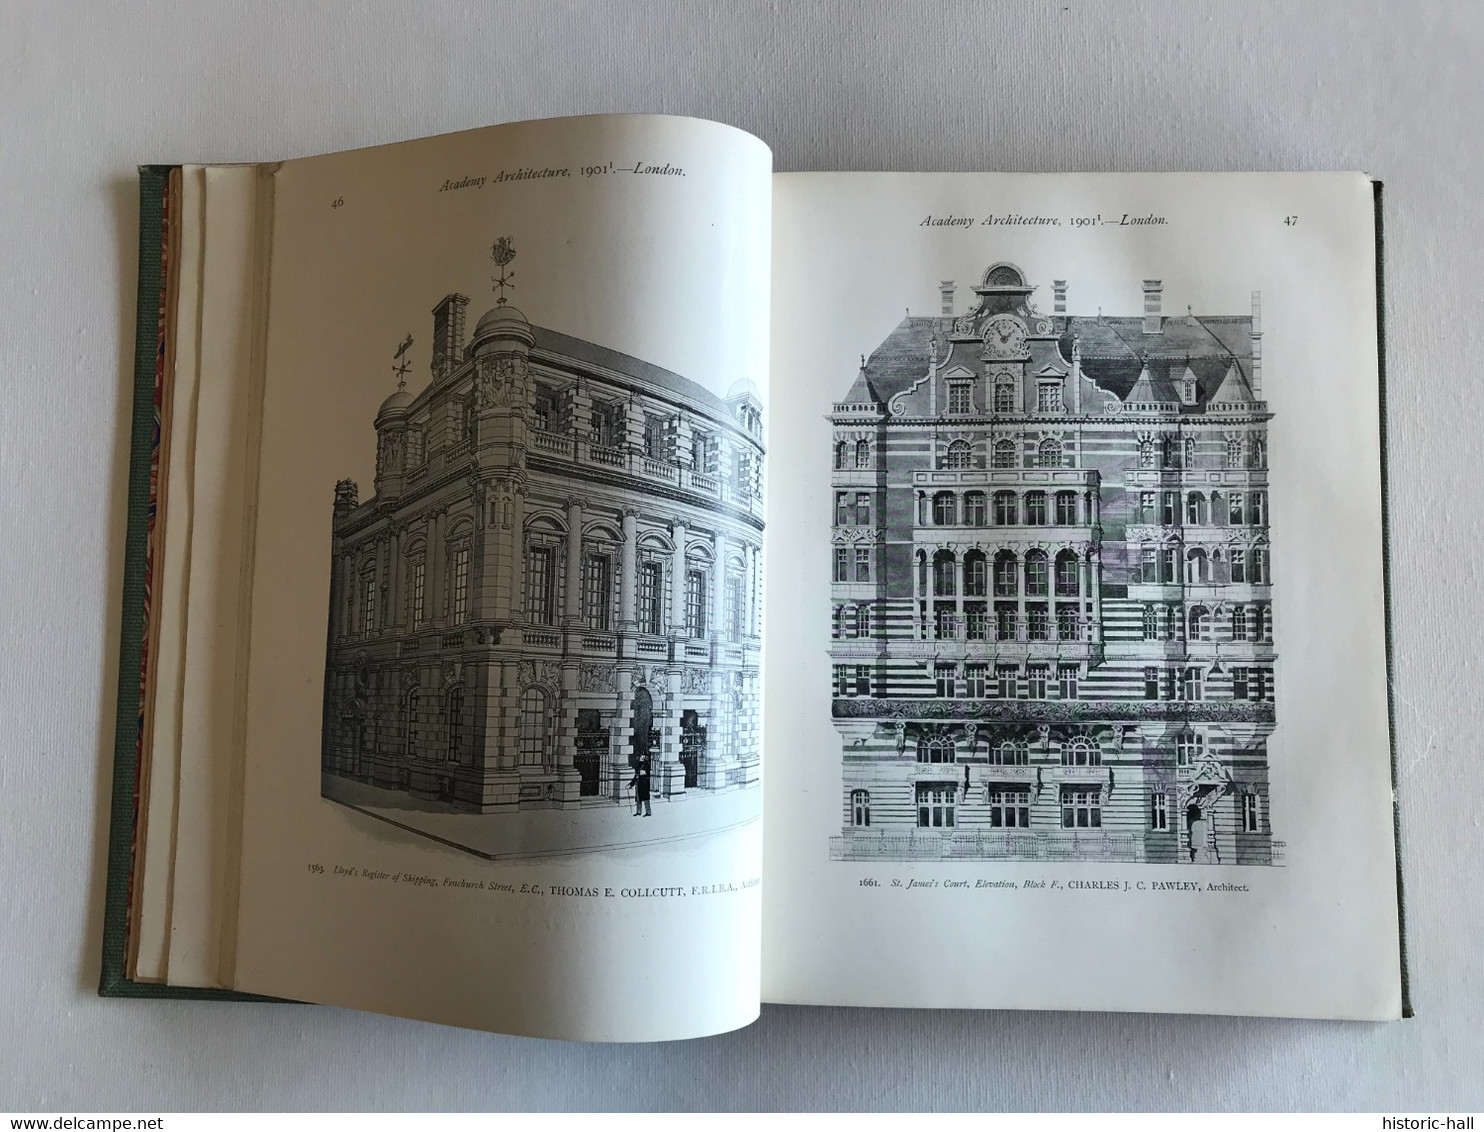 ACADEMY ARCHITECTURE & Architectural Review - Vol I & II - 1901 - Alexander KOCH - Architettura